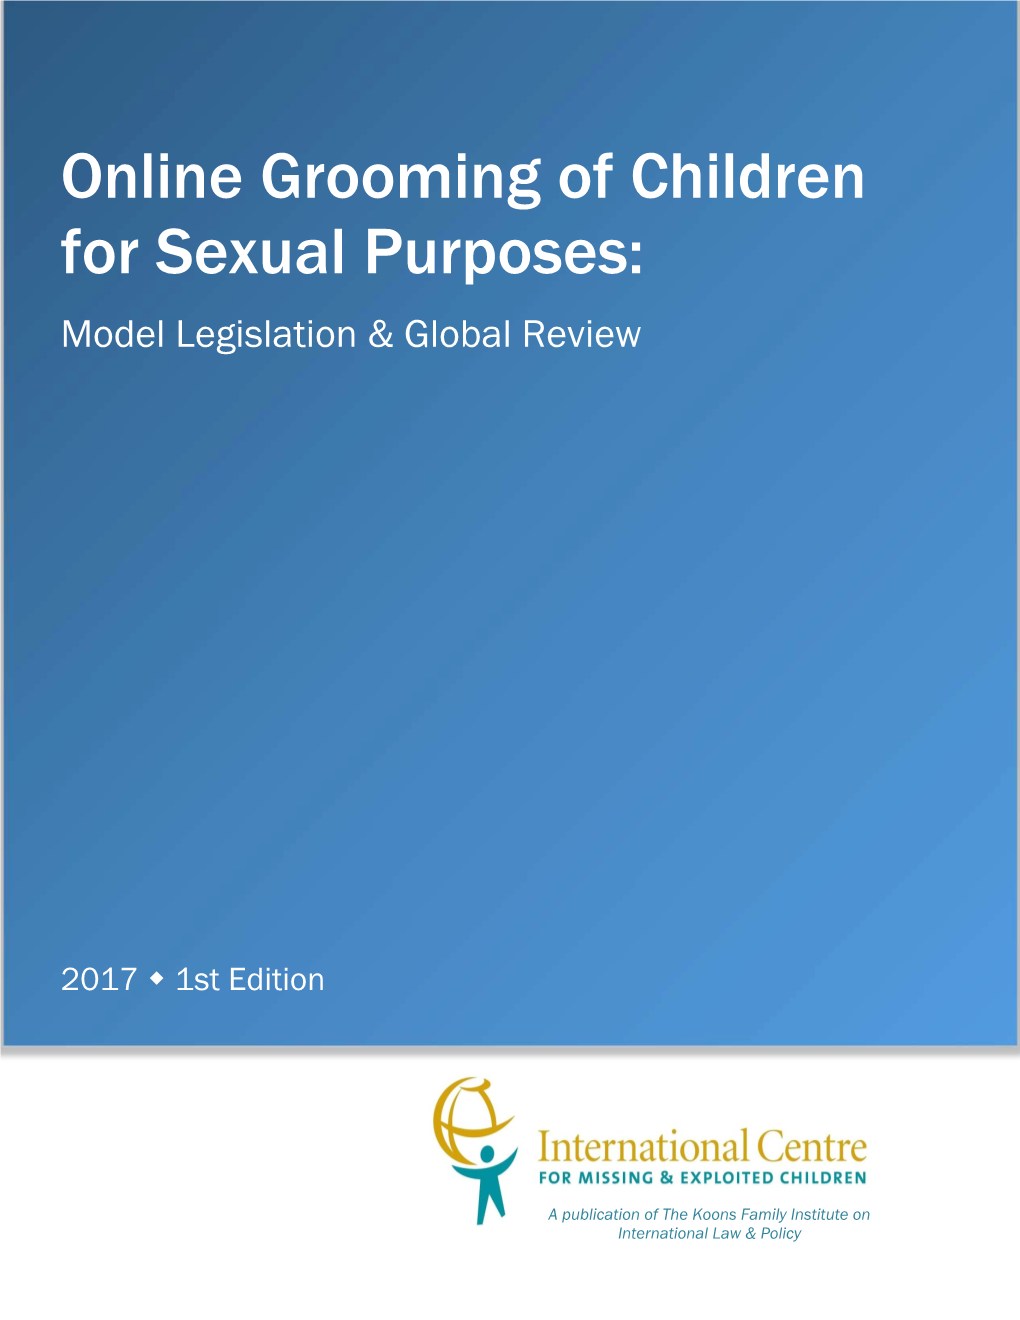 Online Grooming of Children for Sexual Purposes (ICMEC)